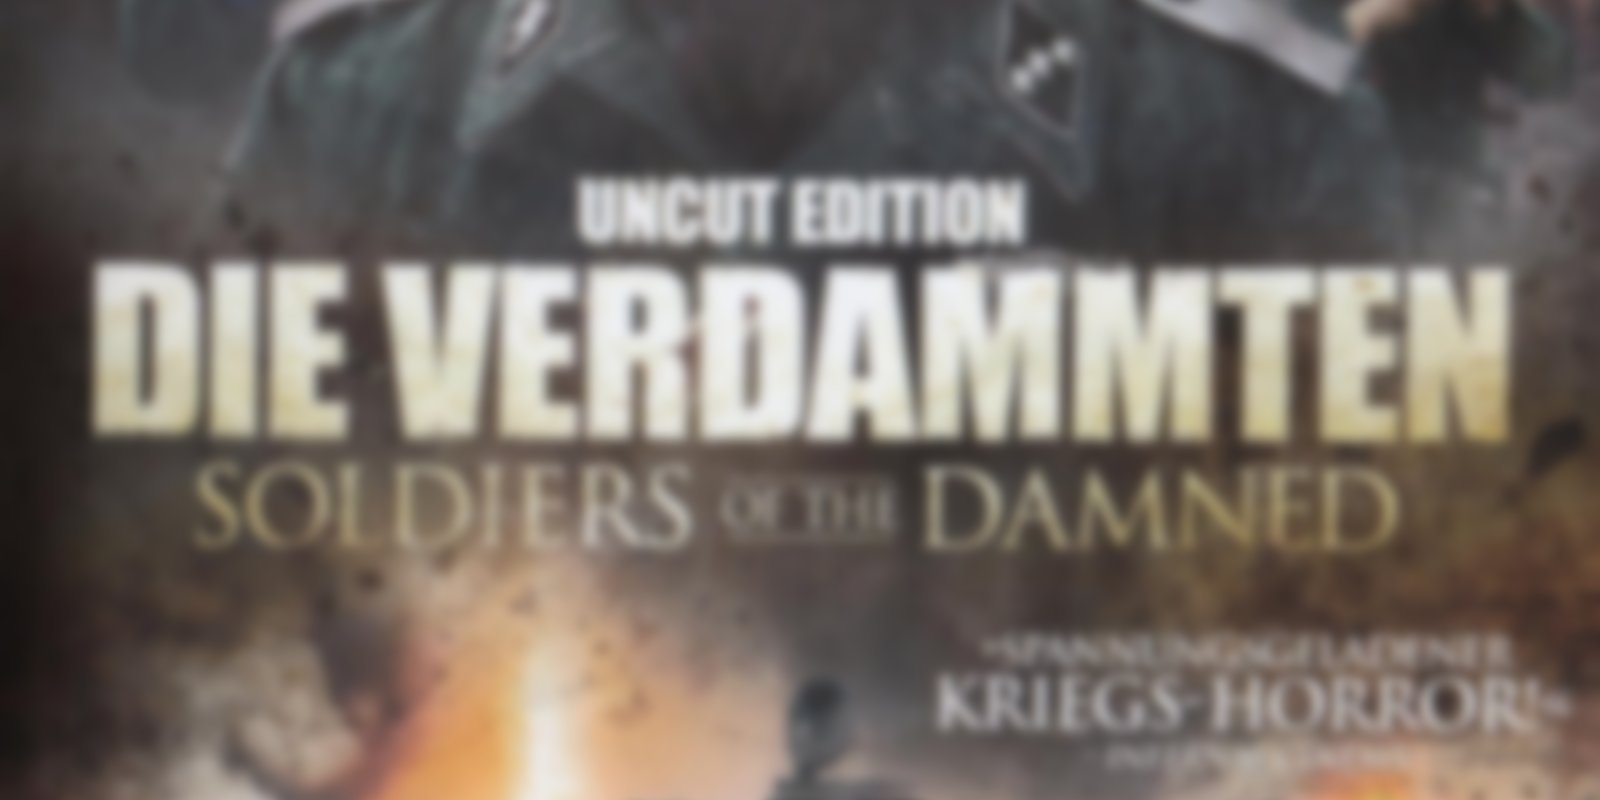 Soldiers of the Damned - Die Verdammten